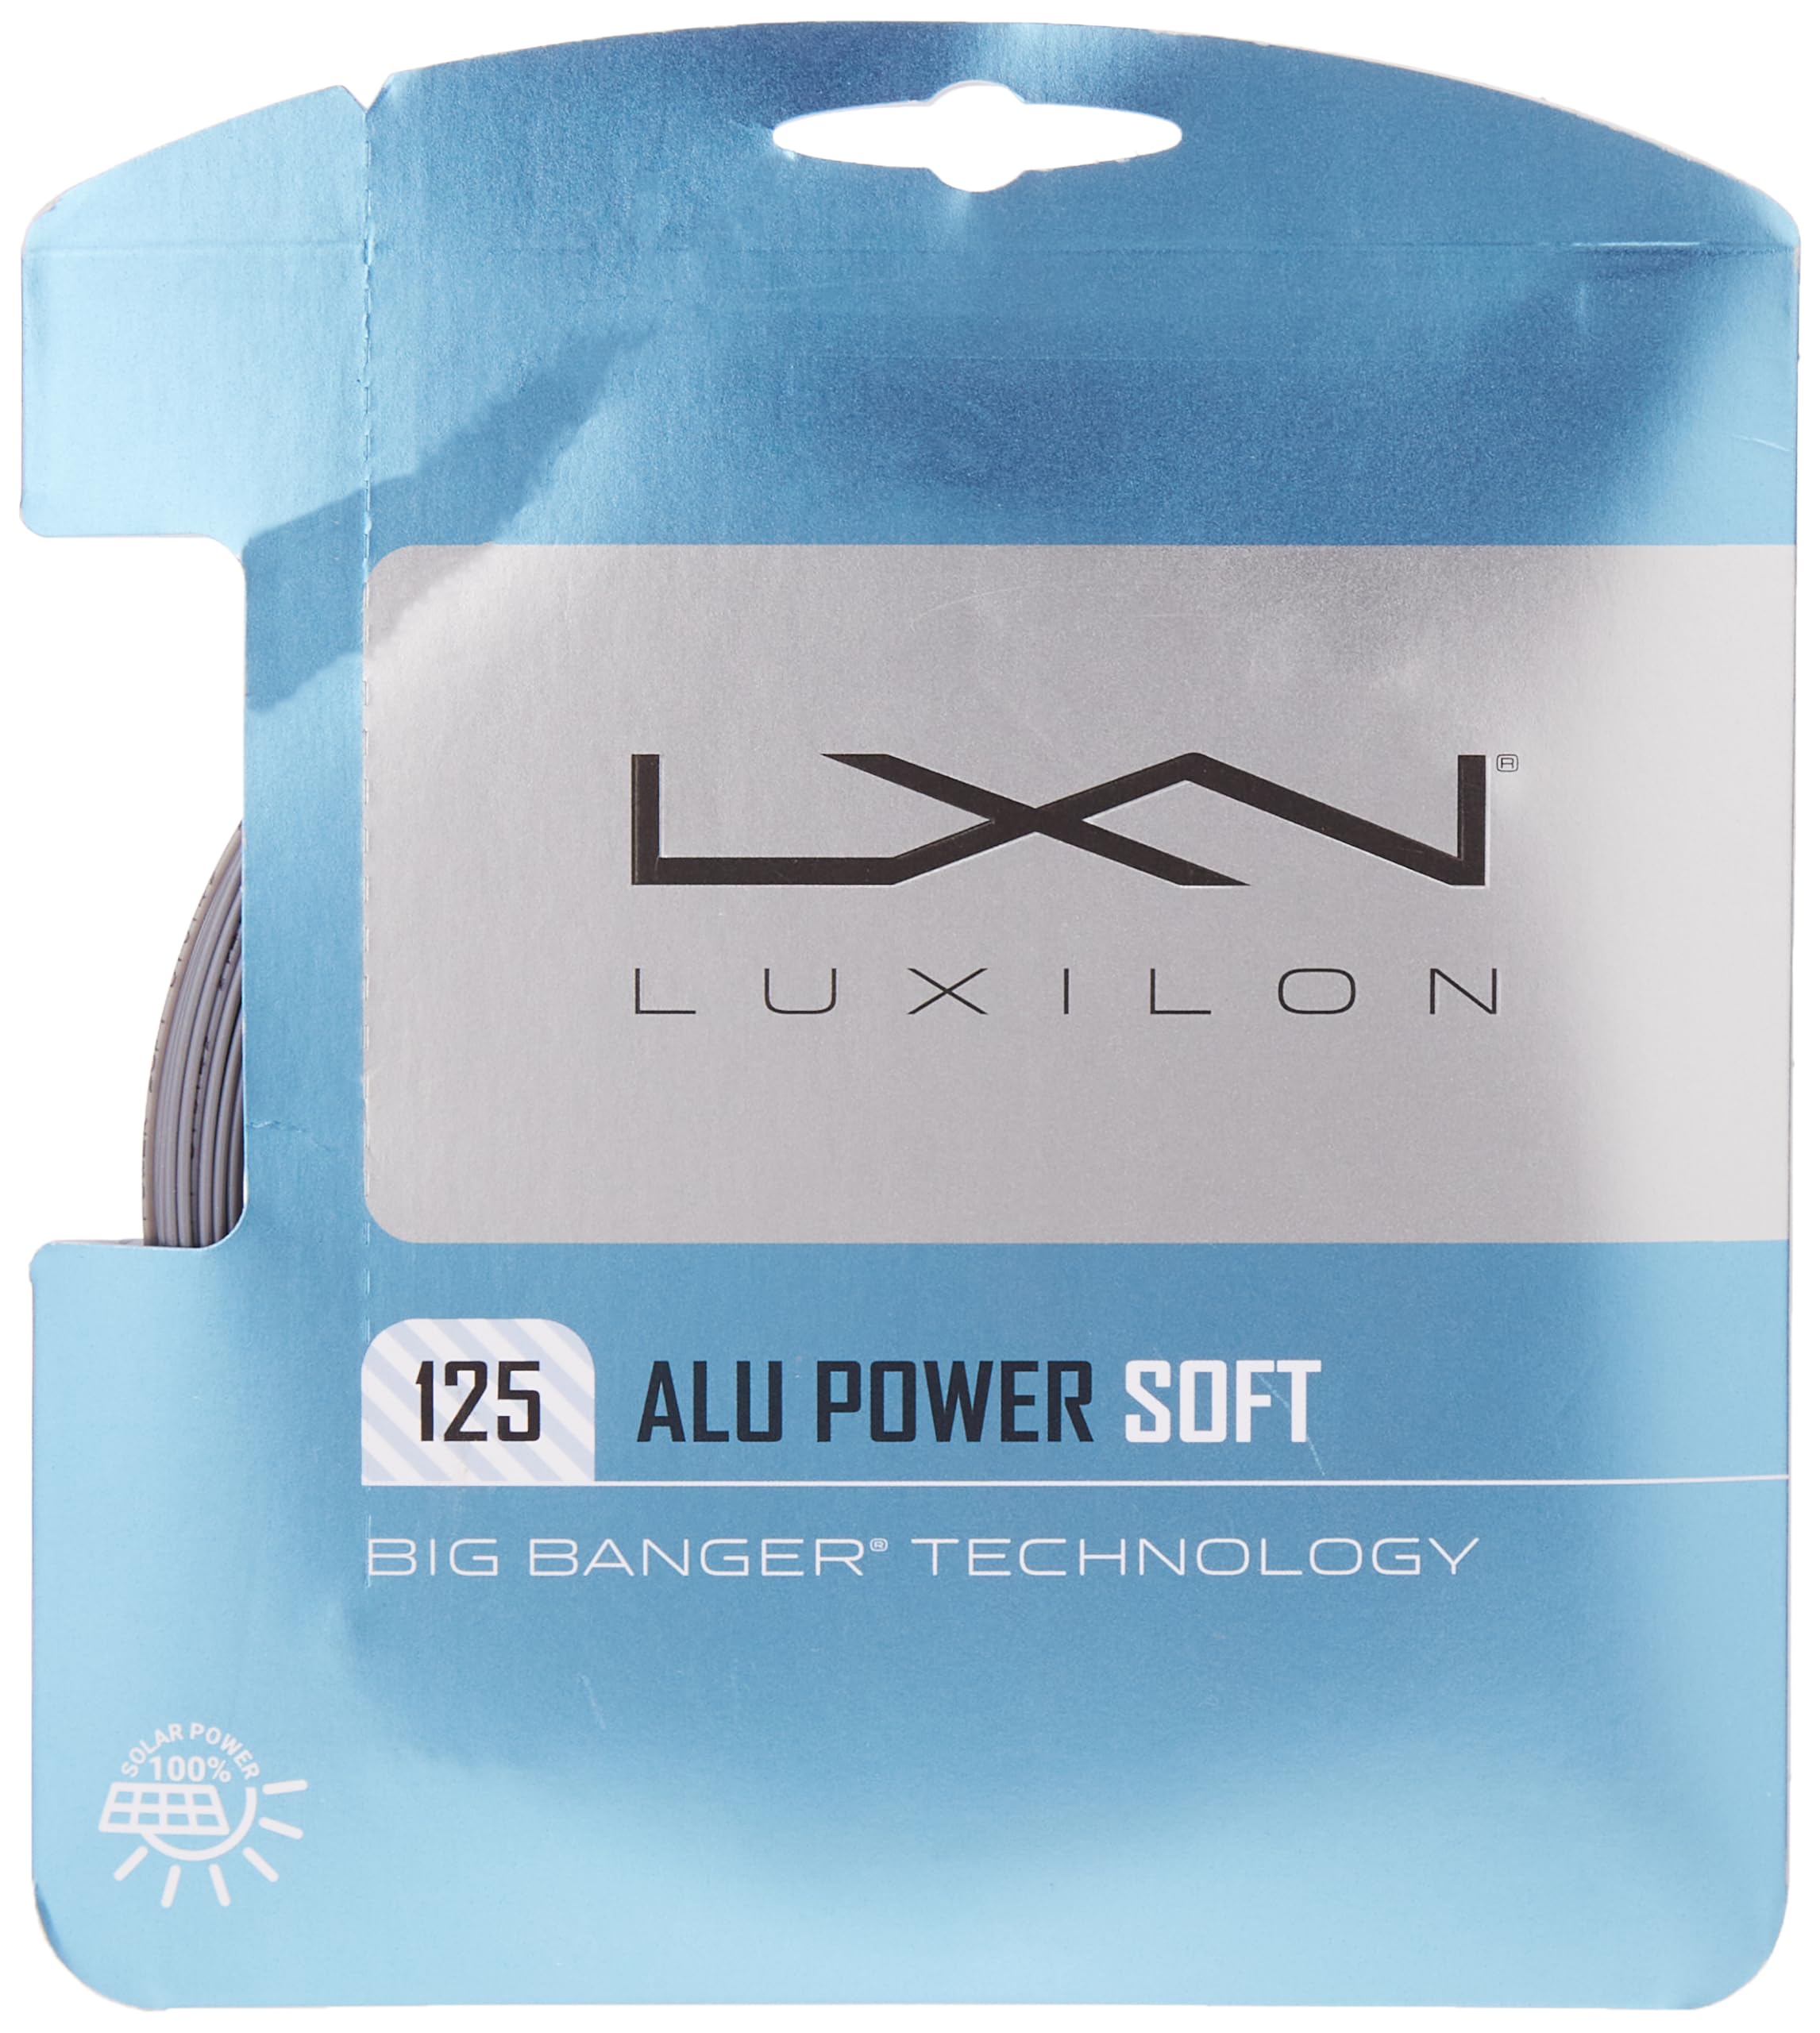 LUXILON(ルキシロン) テニス ストリング ガット ALU POWER 125(アルパワーソフト 125) 単張り シルバー WRZ990101